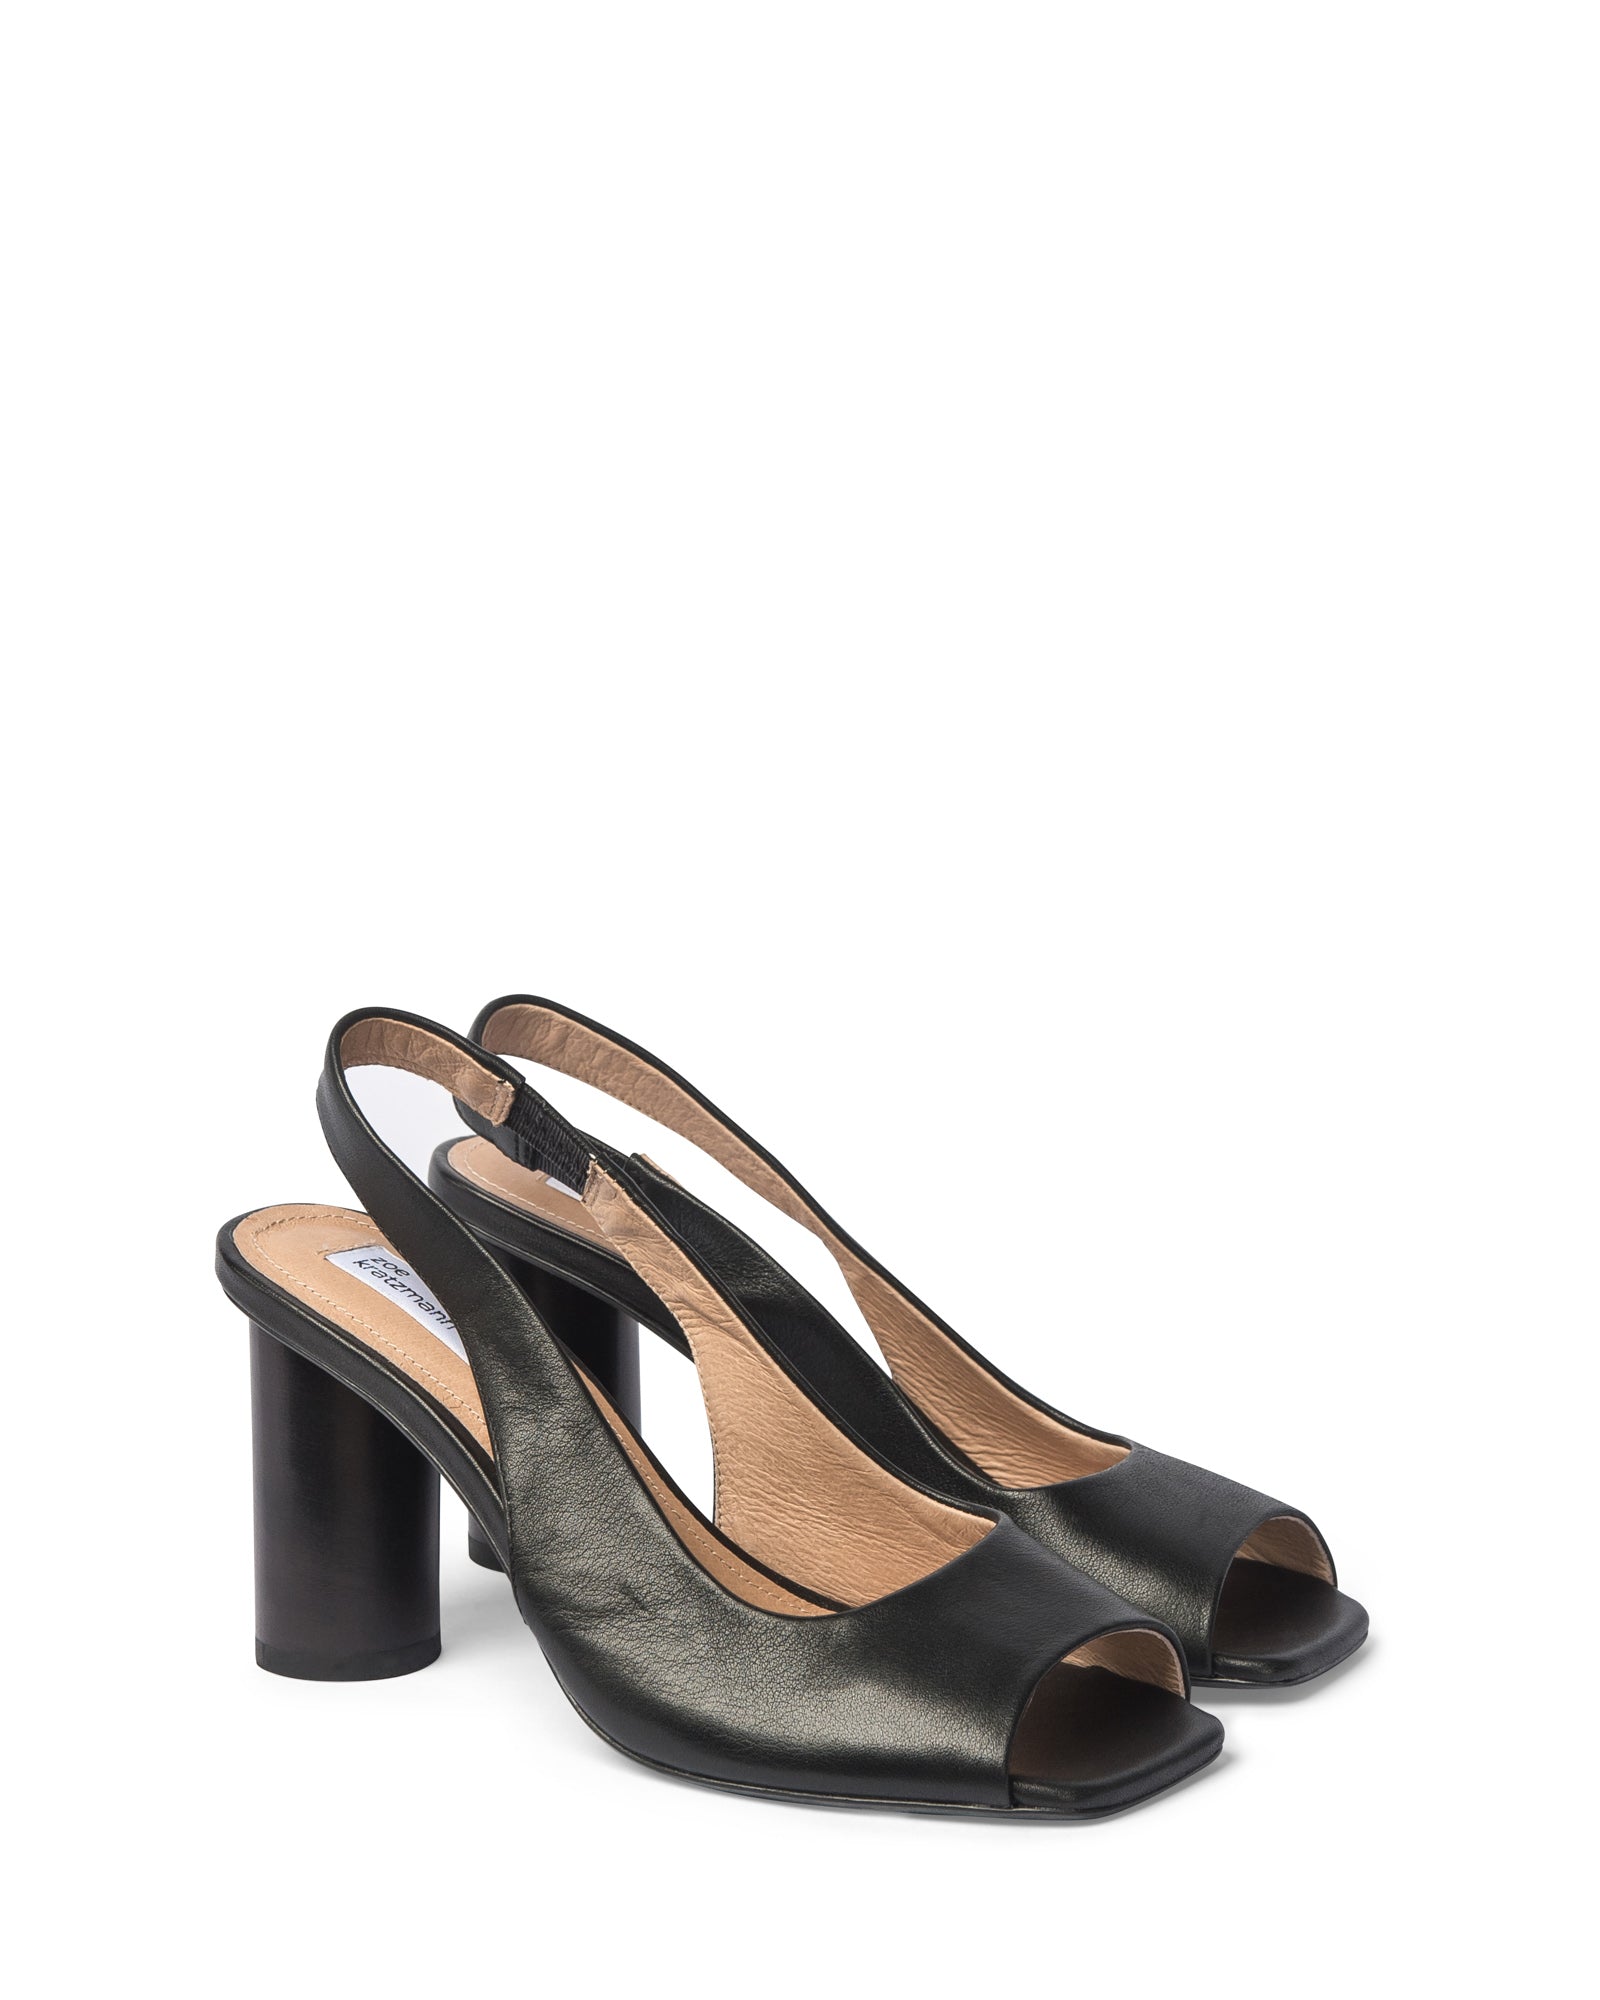 black, heel, squared toe shape, slingback strap, wooden heel, product image